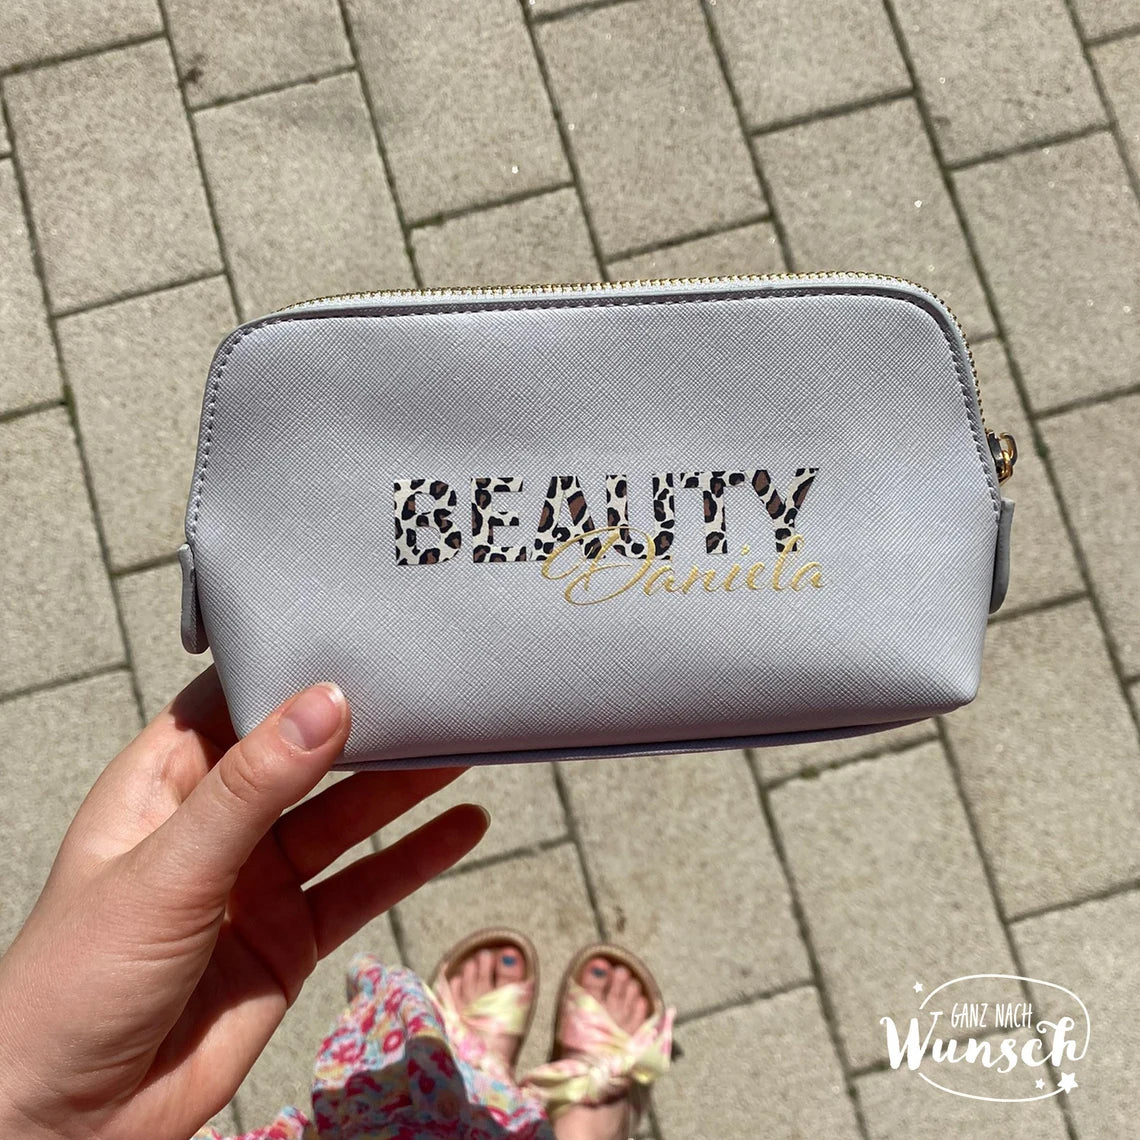 Kosmetiktasche | Beauty Bag | Make Up Tasche | Kosmetikbeutel | Kulturtasche | Schminktasche | Geschenk Freundin | personalisiert mit Namen